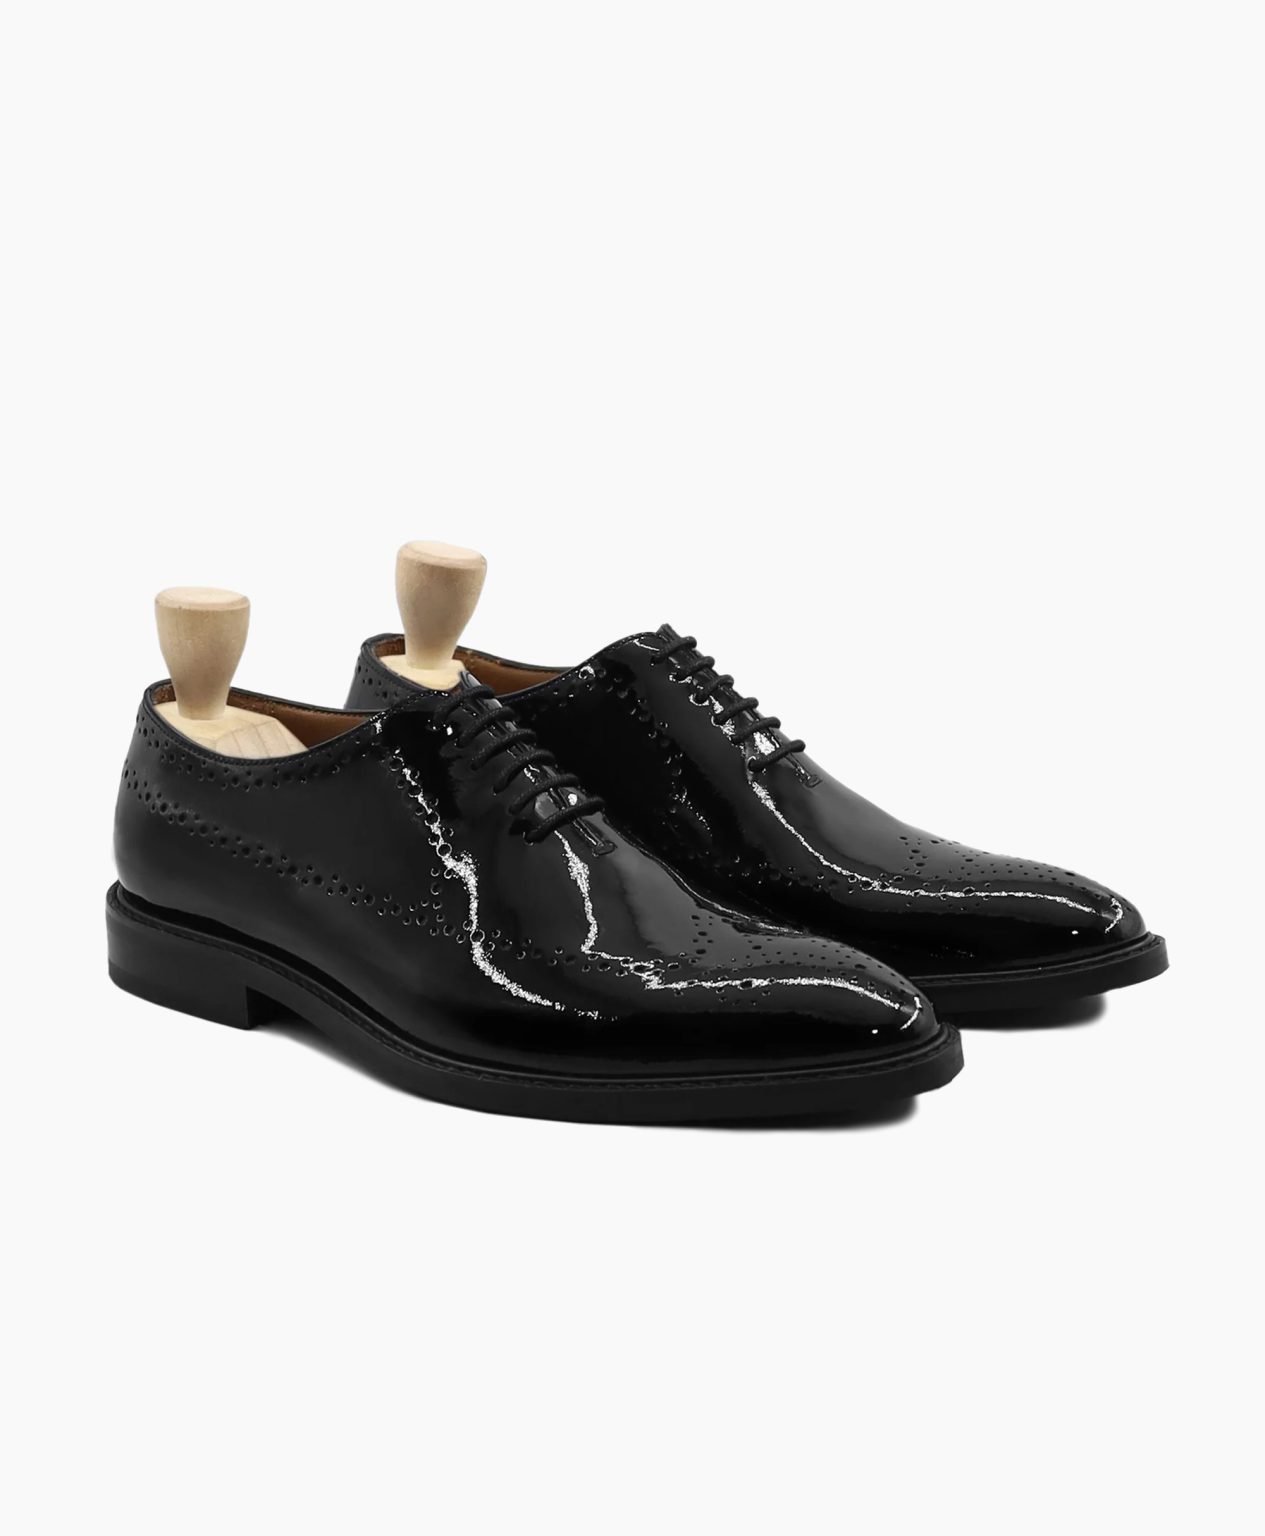 eastbourne-wholecut-black-patent-leather-shoes-image200